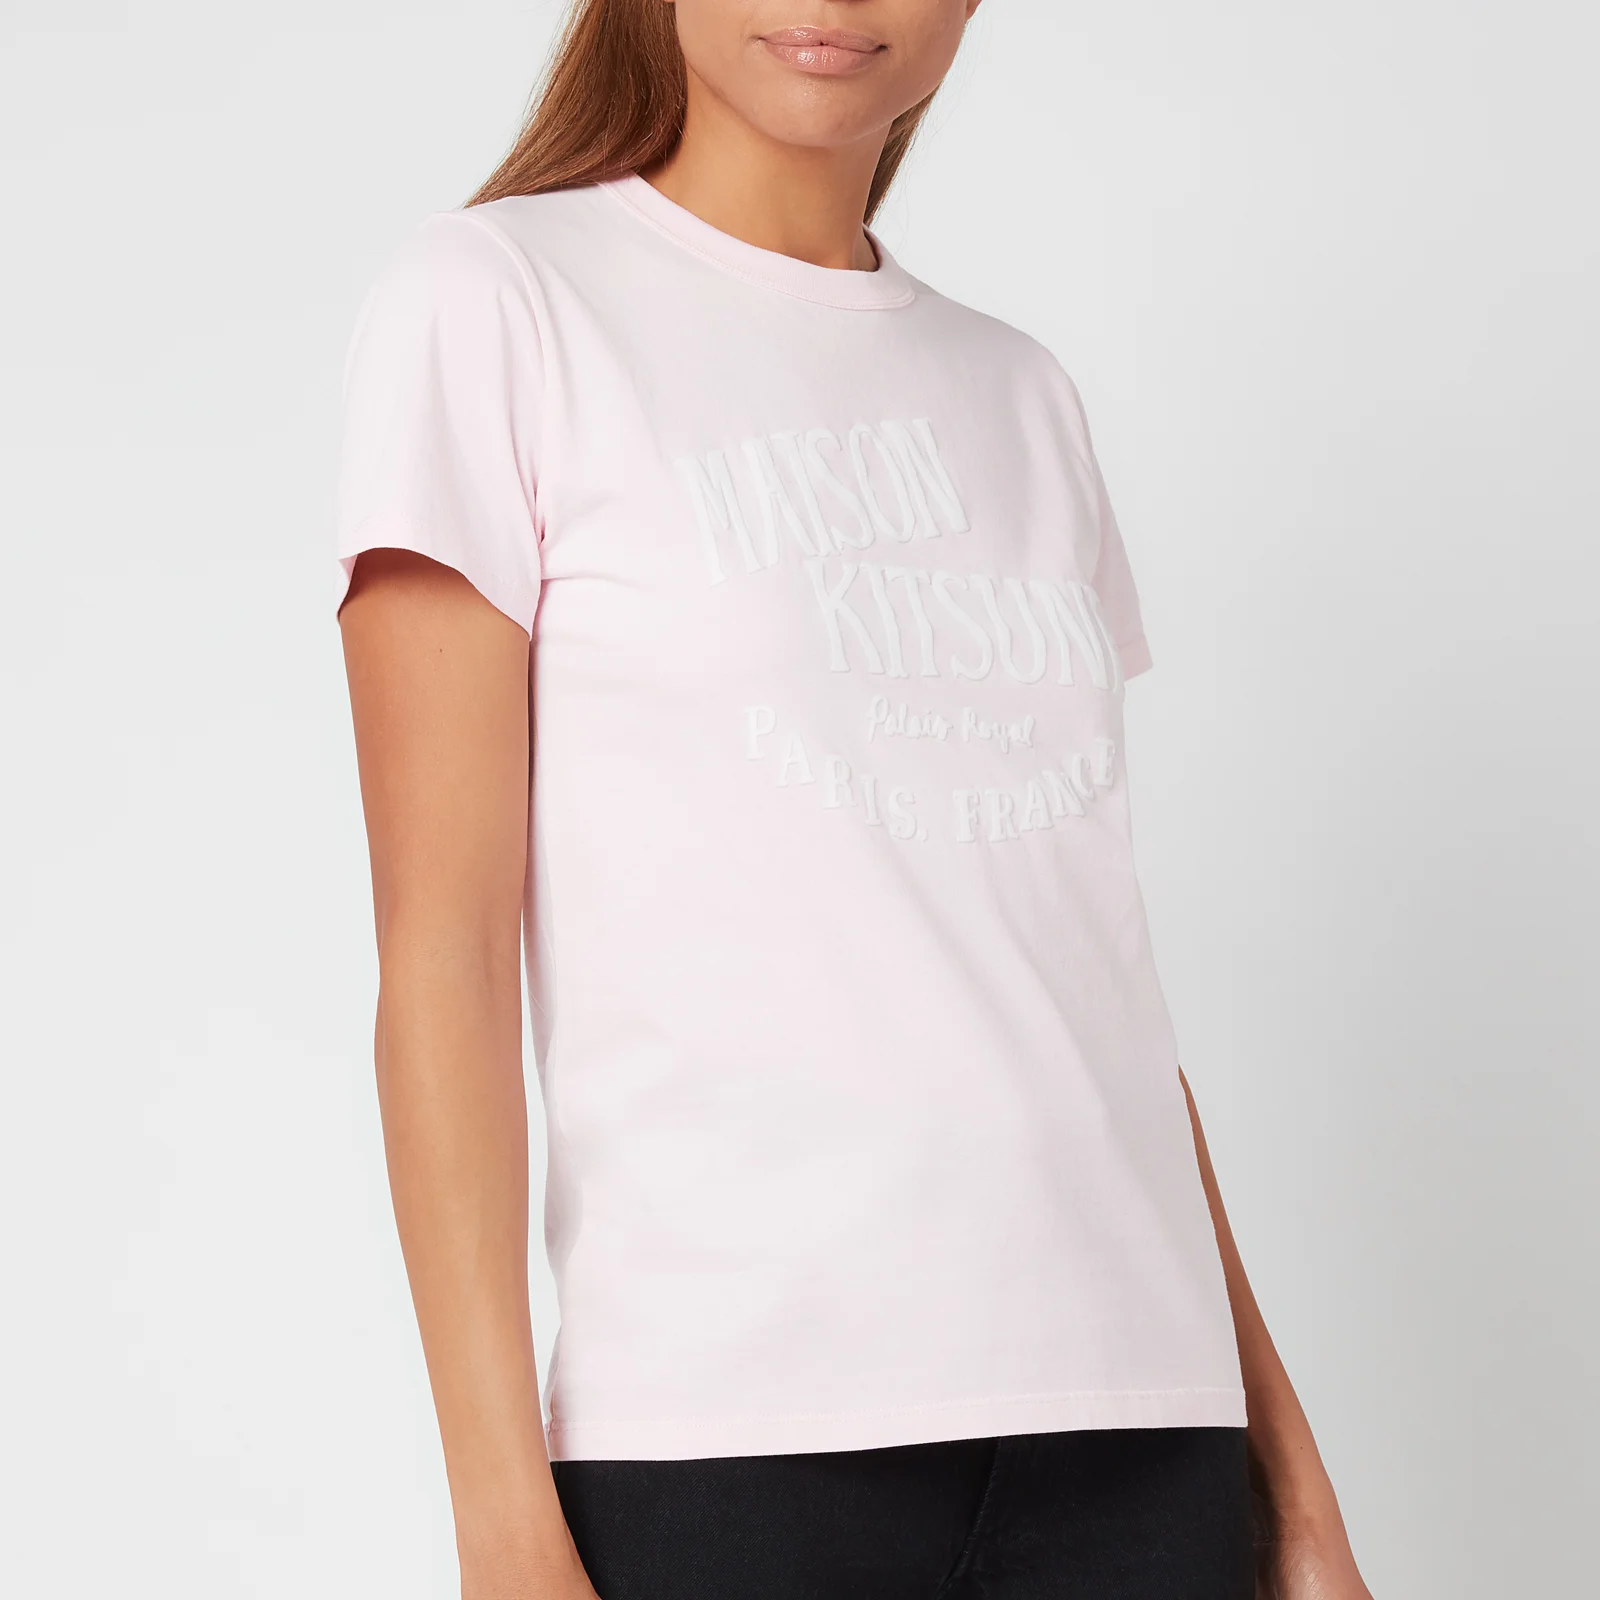 Maison Kitsuné Women's Palais Royal Classic T-Shirt - Light Pink Image 1